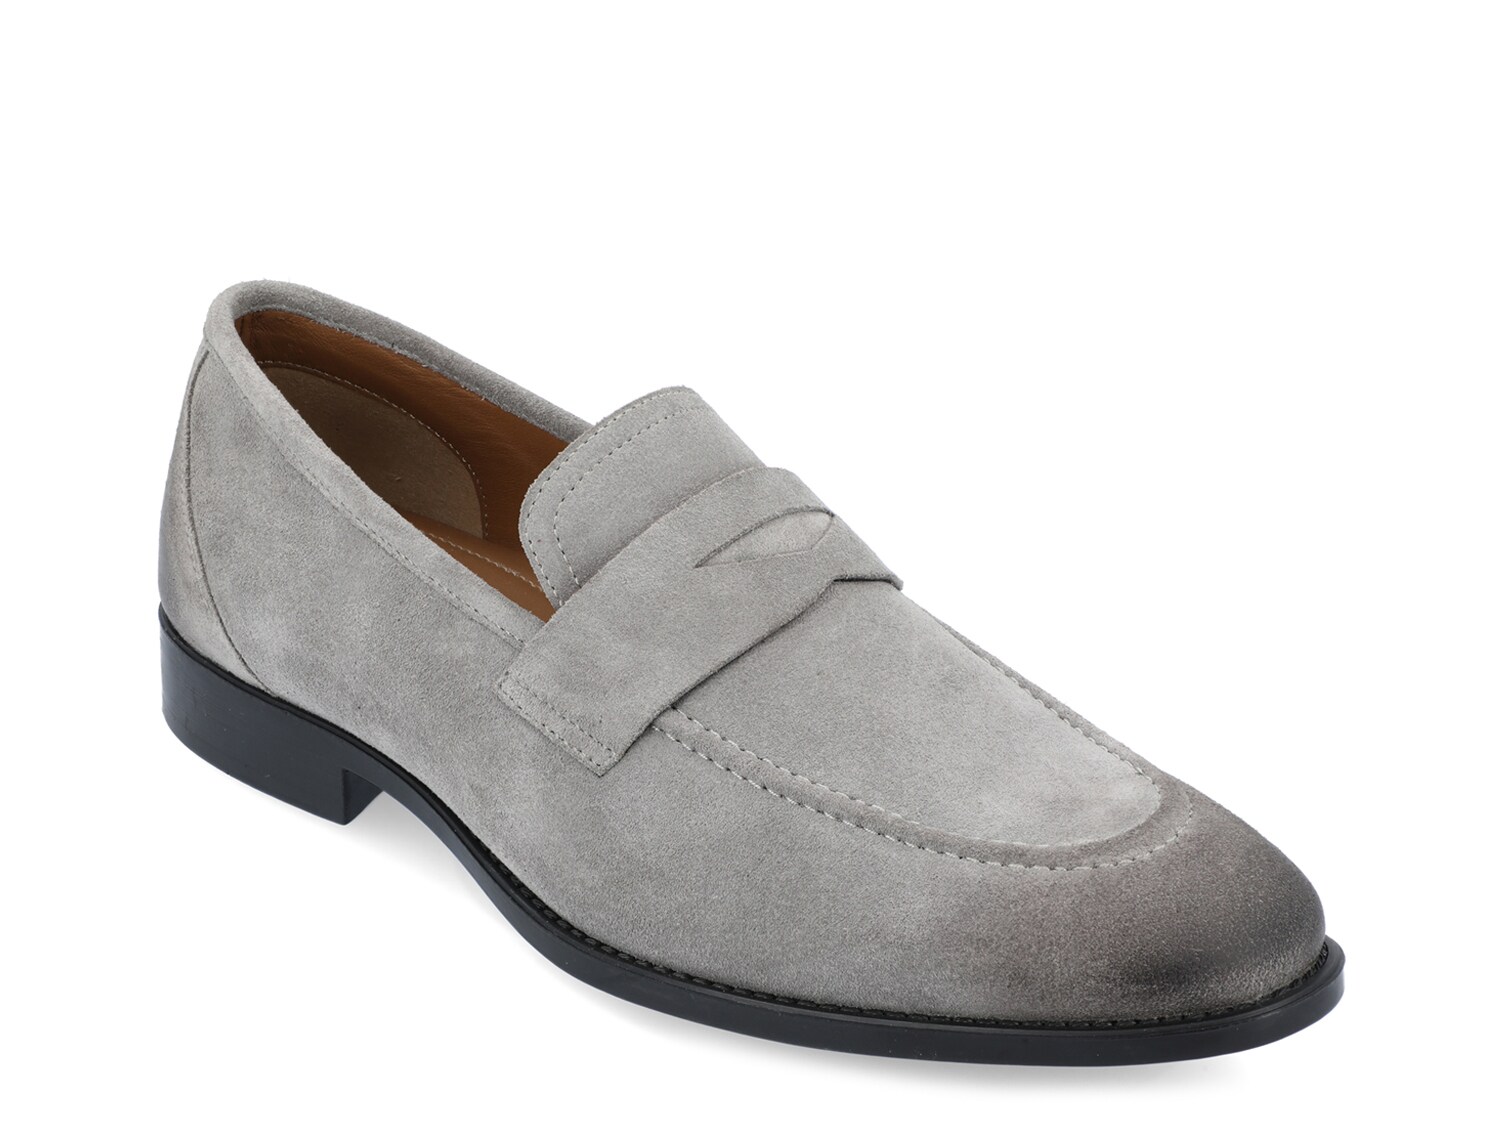 mens gray dress shoes